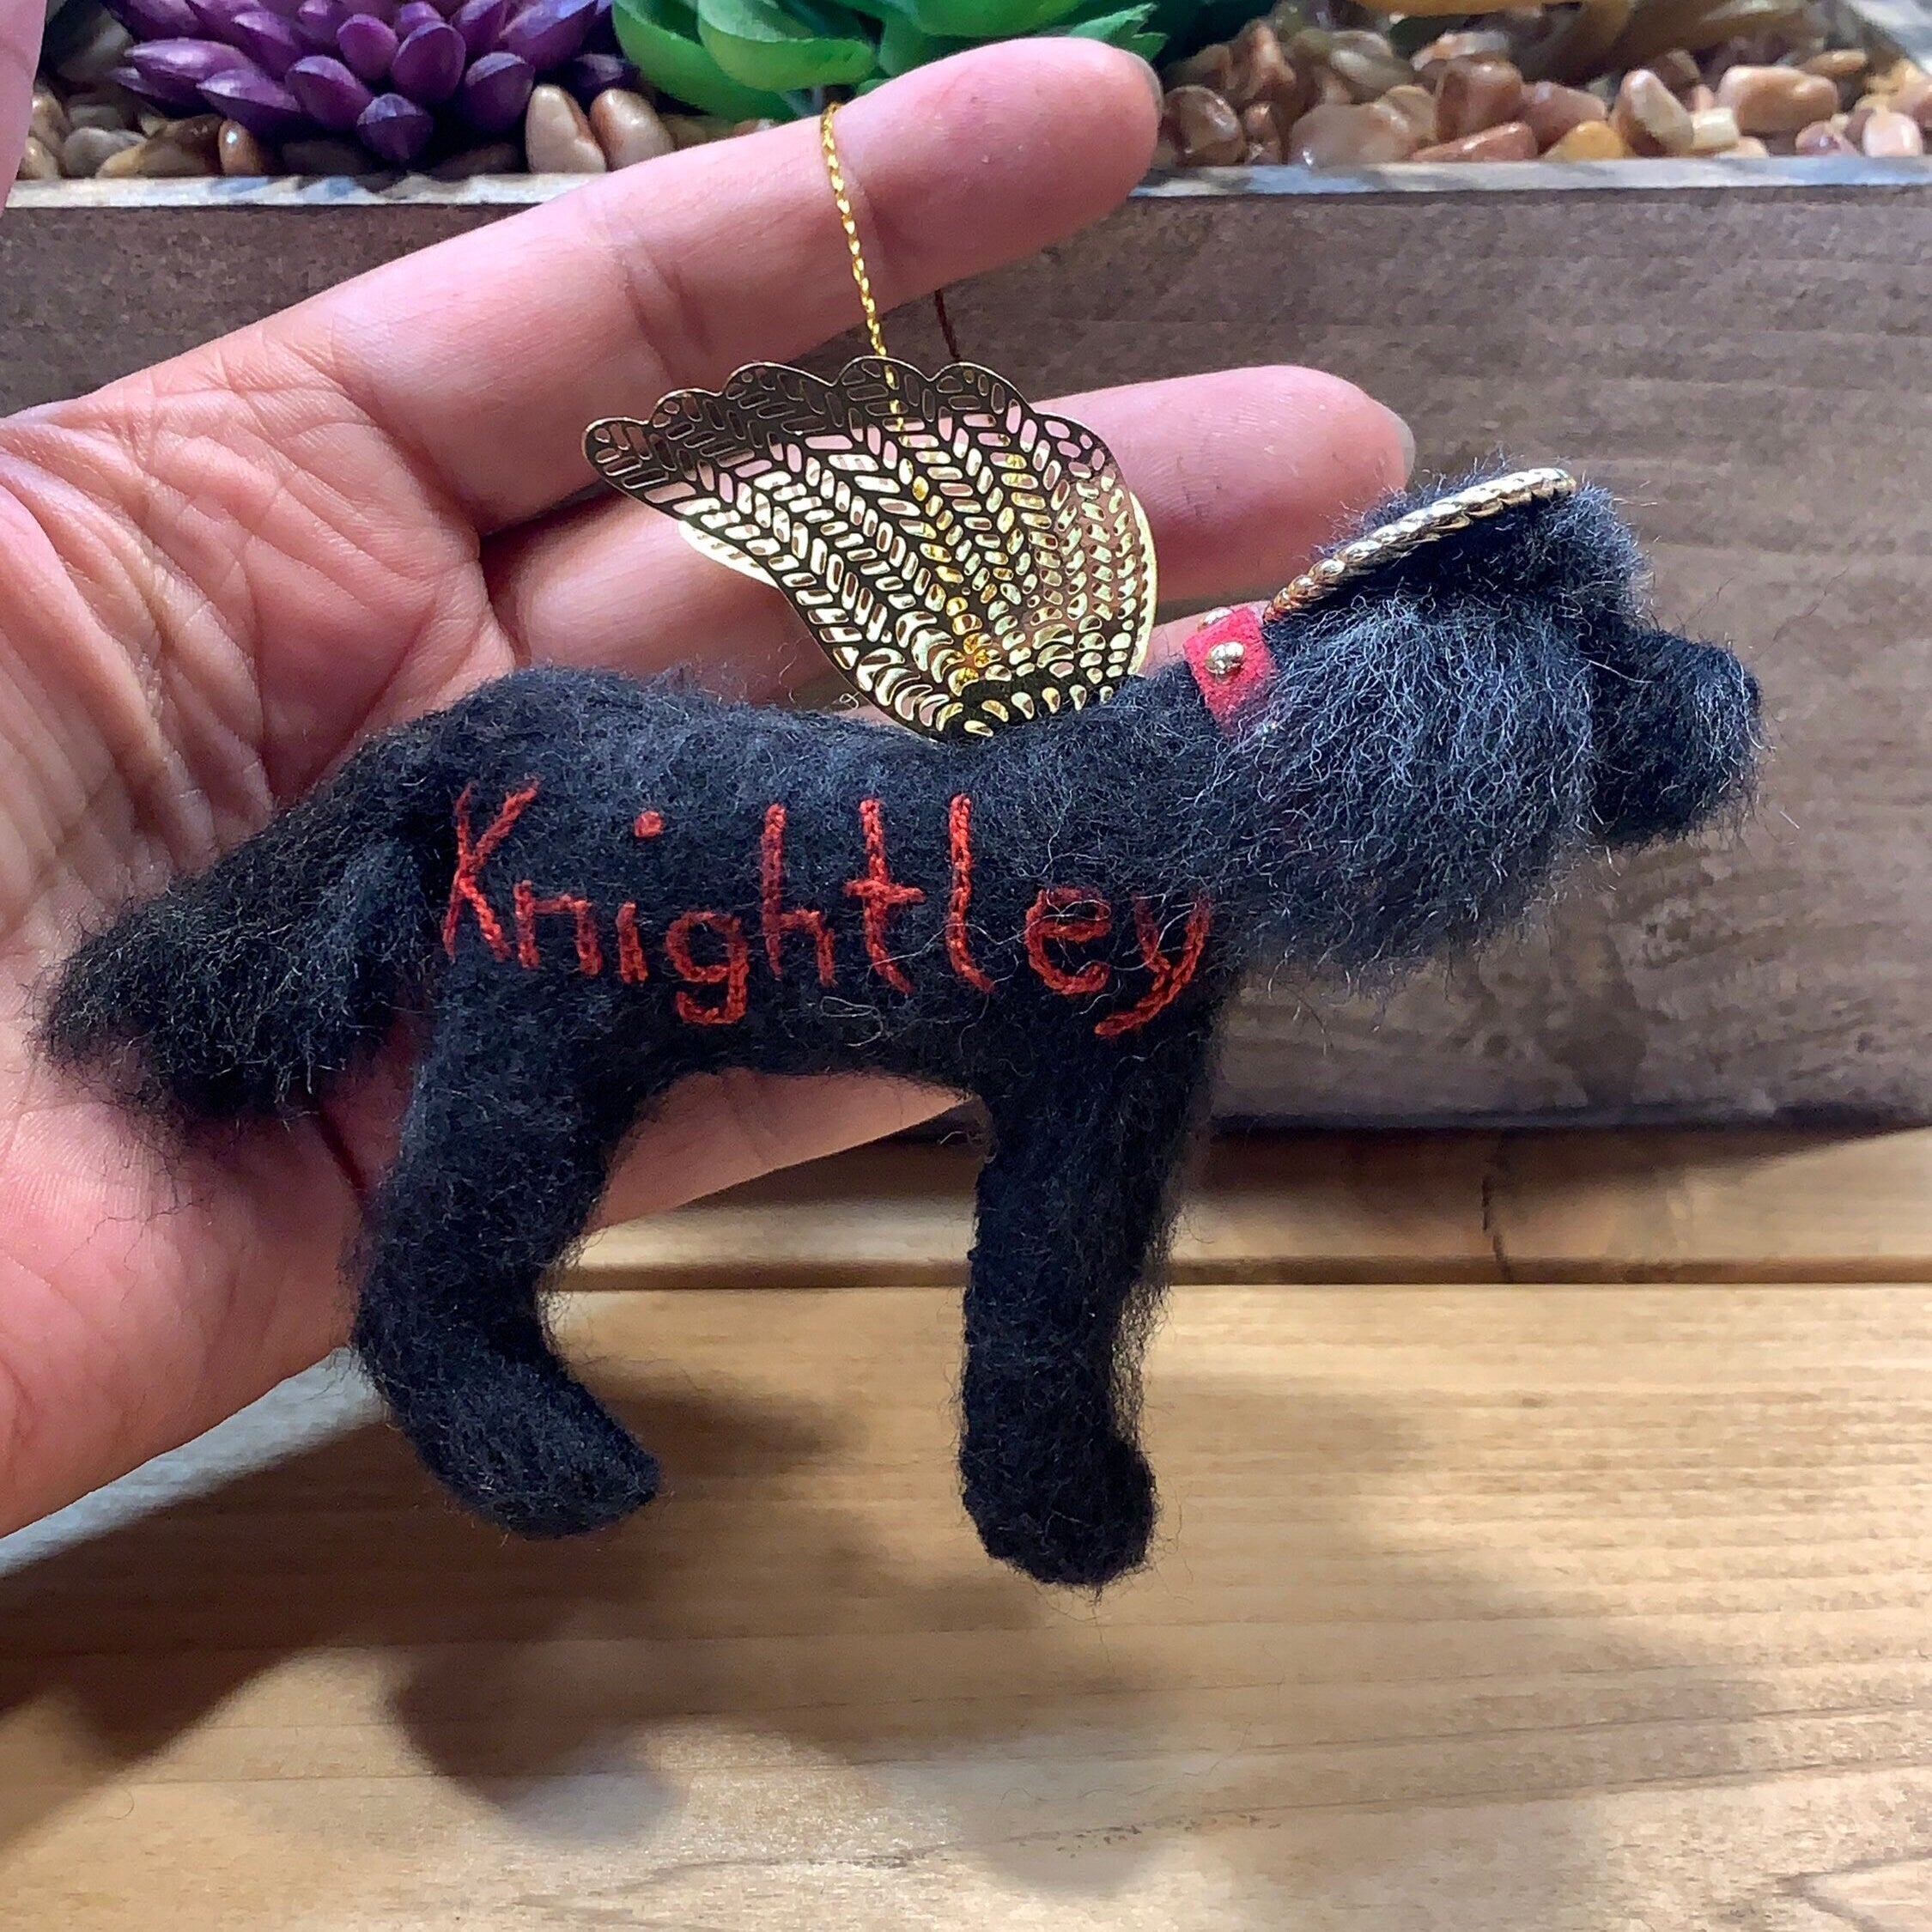 Personalized Black Labradoodle Angel Ornament -Pet Memorial